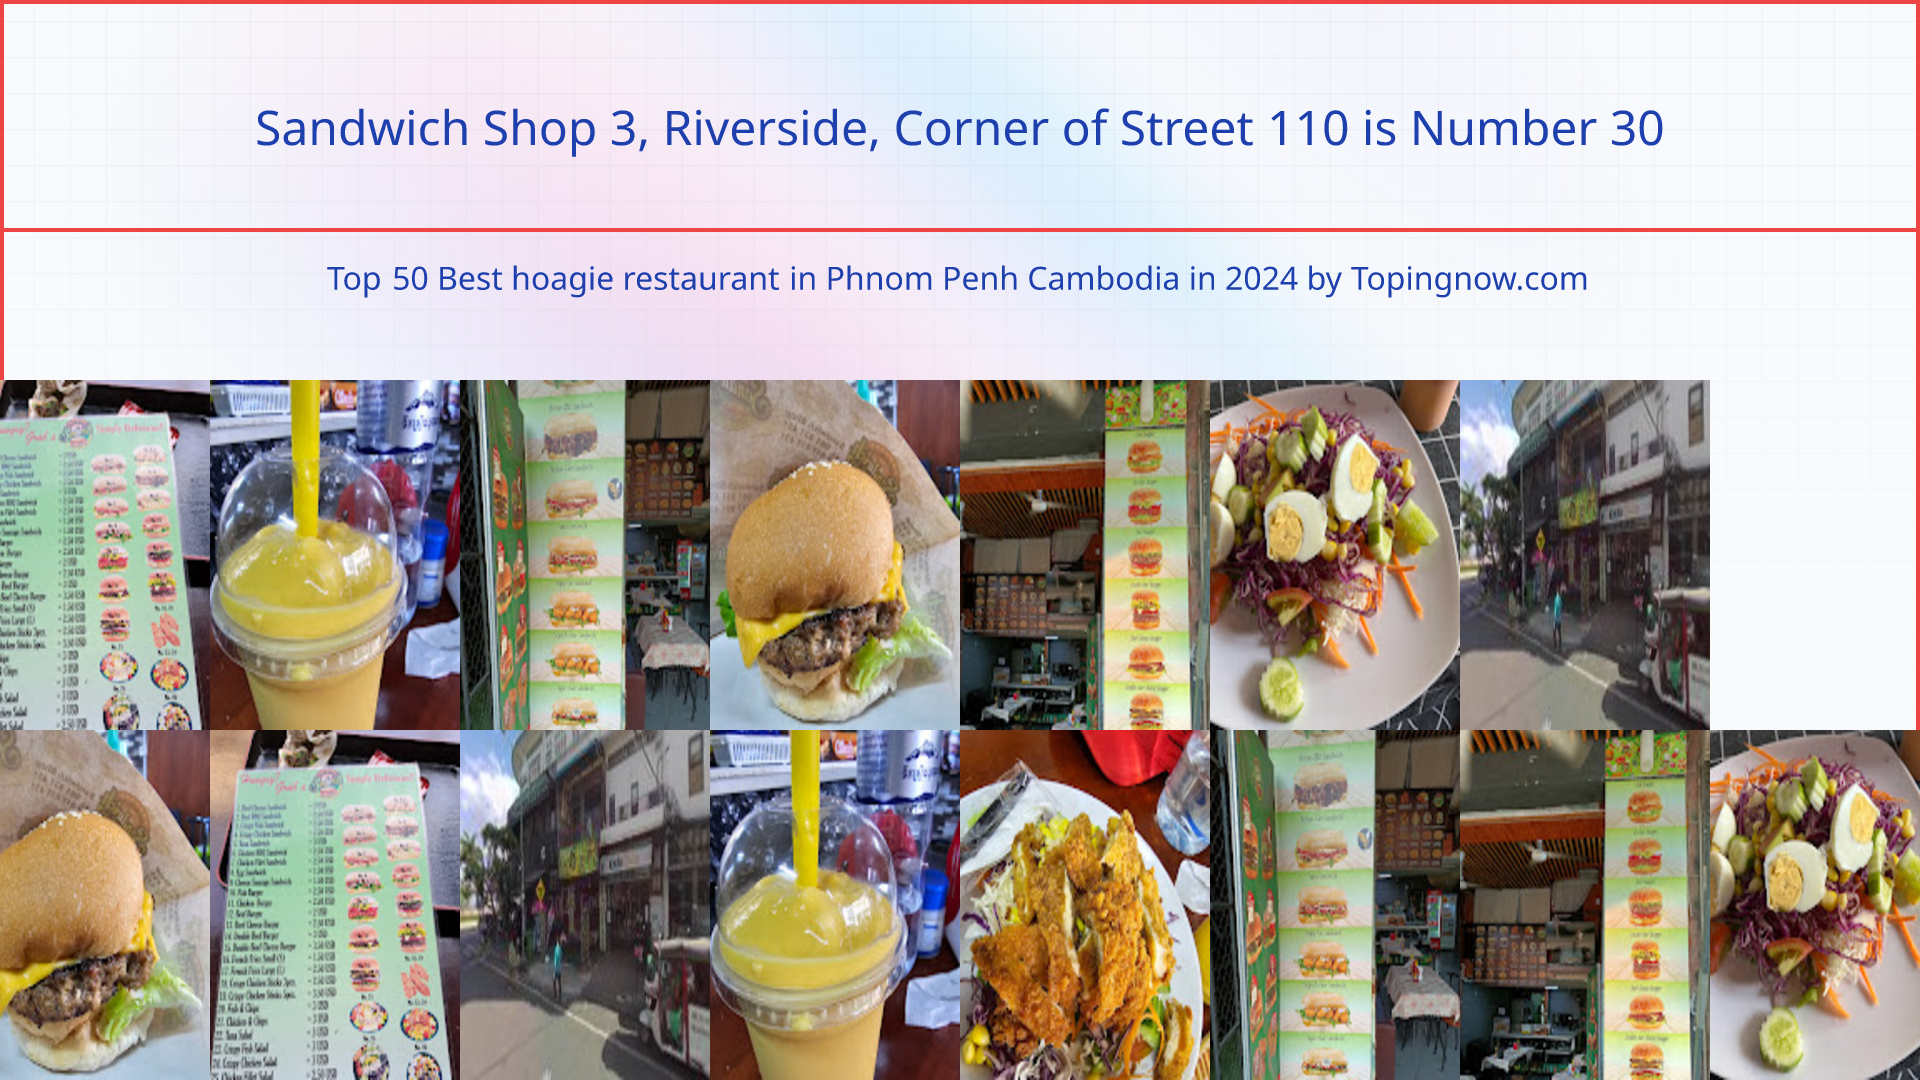 Sandwich Shop 3, Riverside, Corner of Street 110: Top 50 Best hoagie restaurant in Phnom Penh Cambodia in 2024